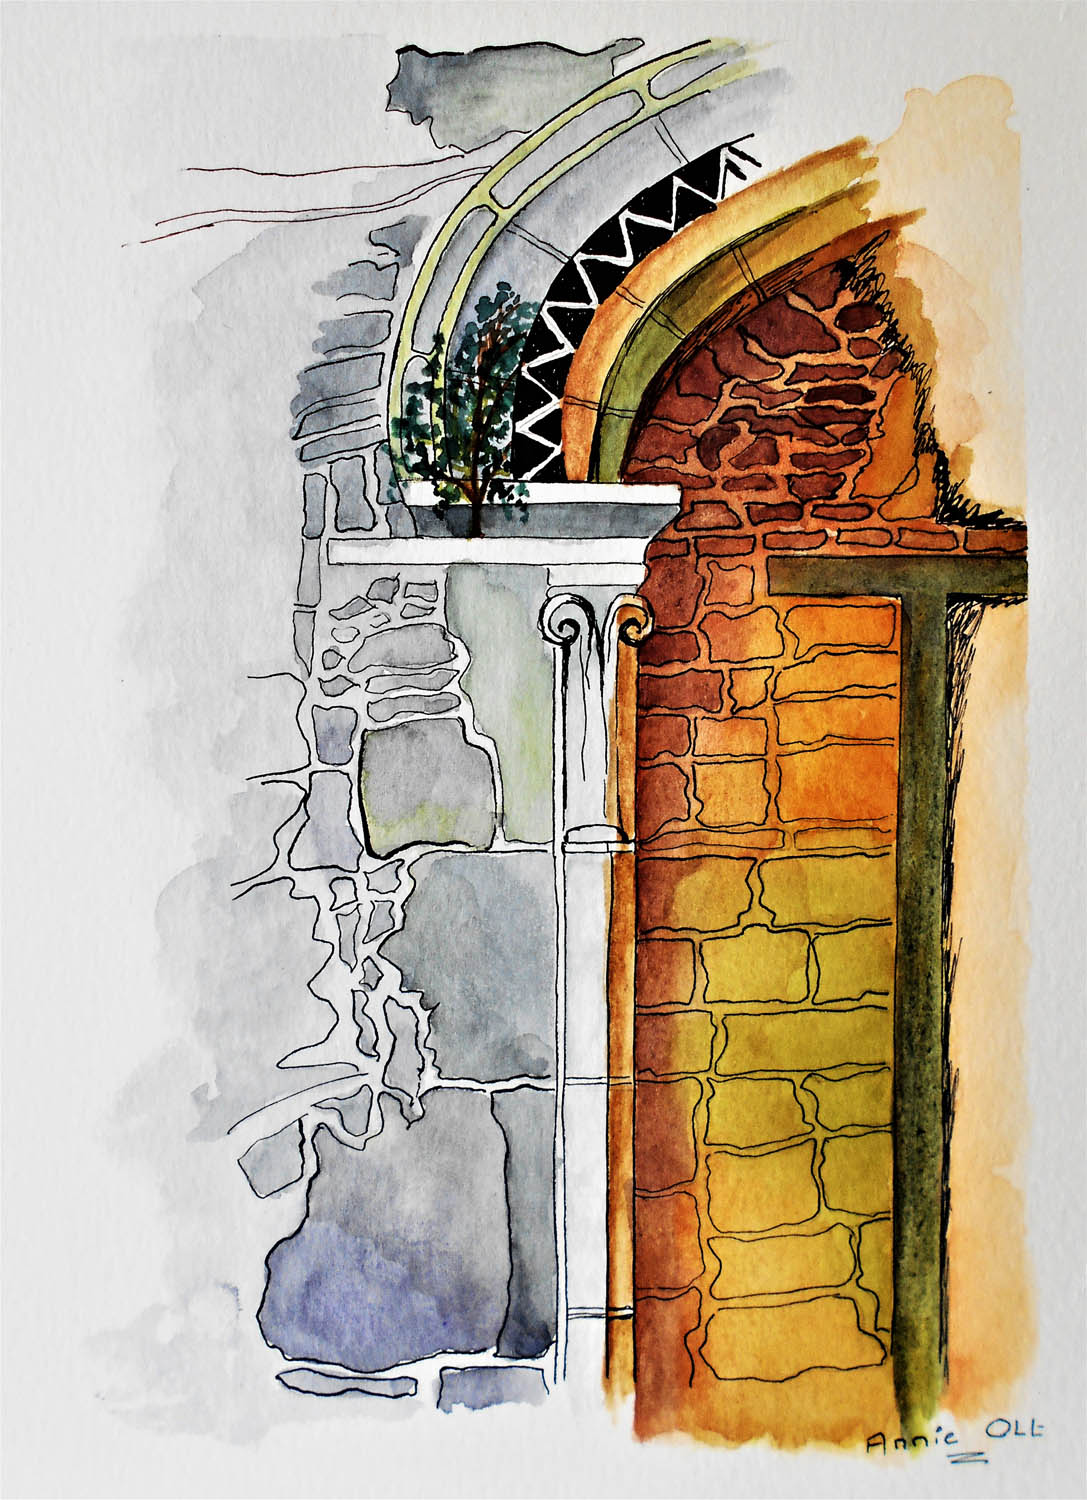 Porte de l'abbaye de Beauport